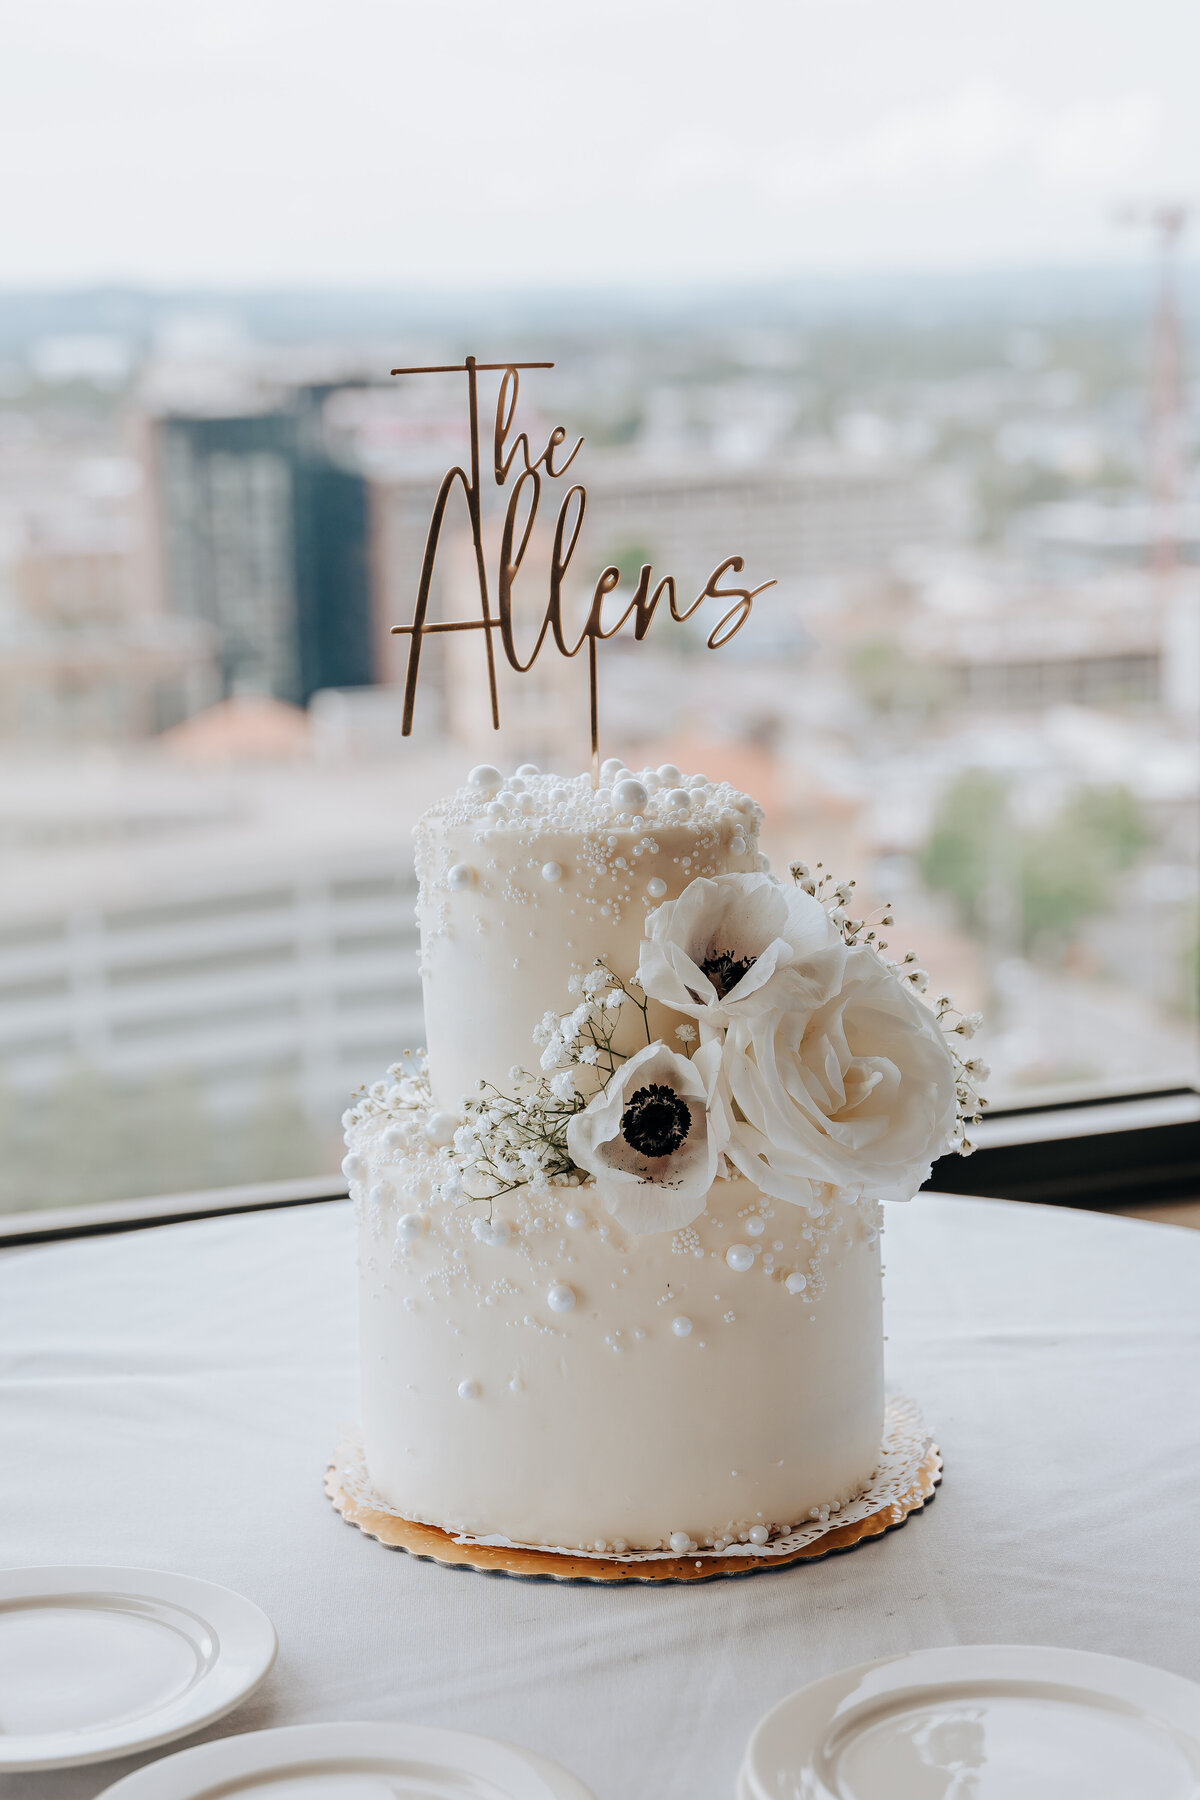 Nashville wedding photographer captures wedding cake covered in pearls